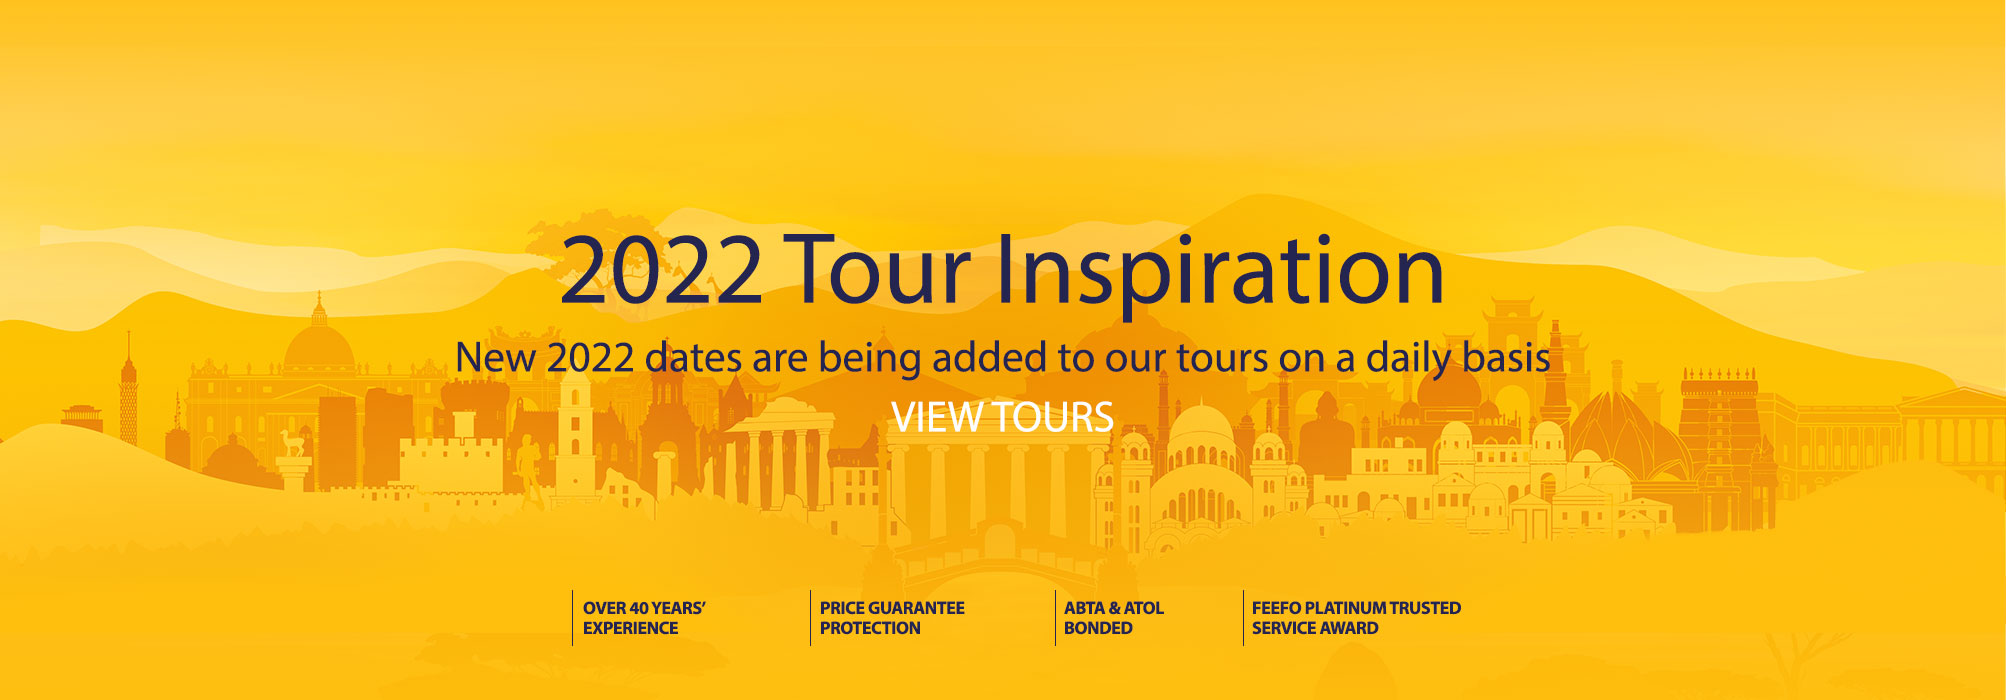 Jules Verne 2022 Tours